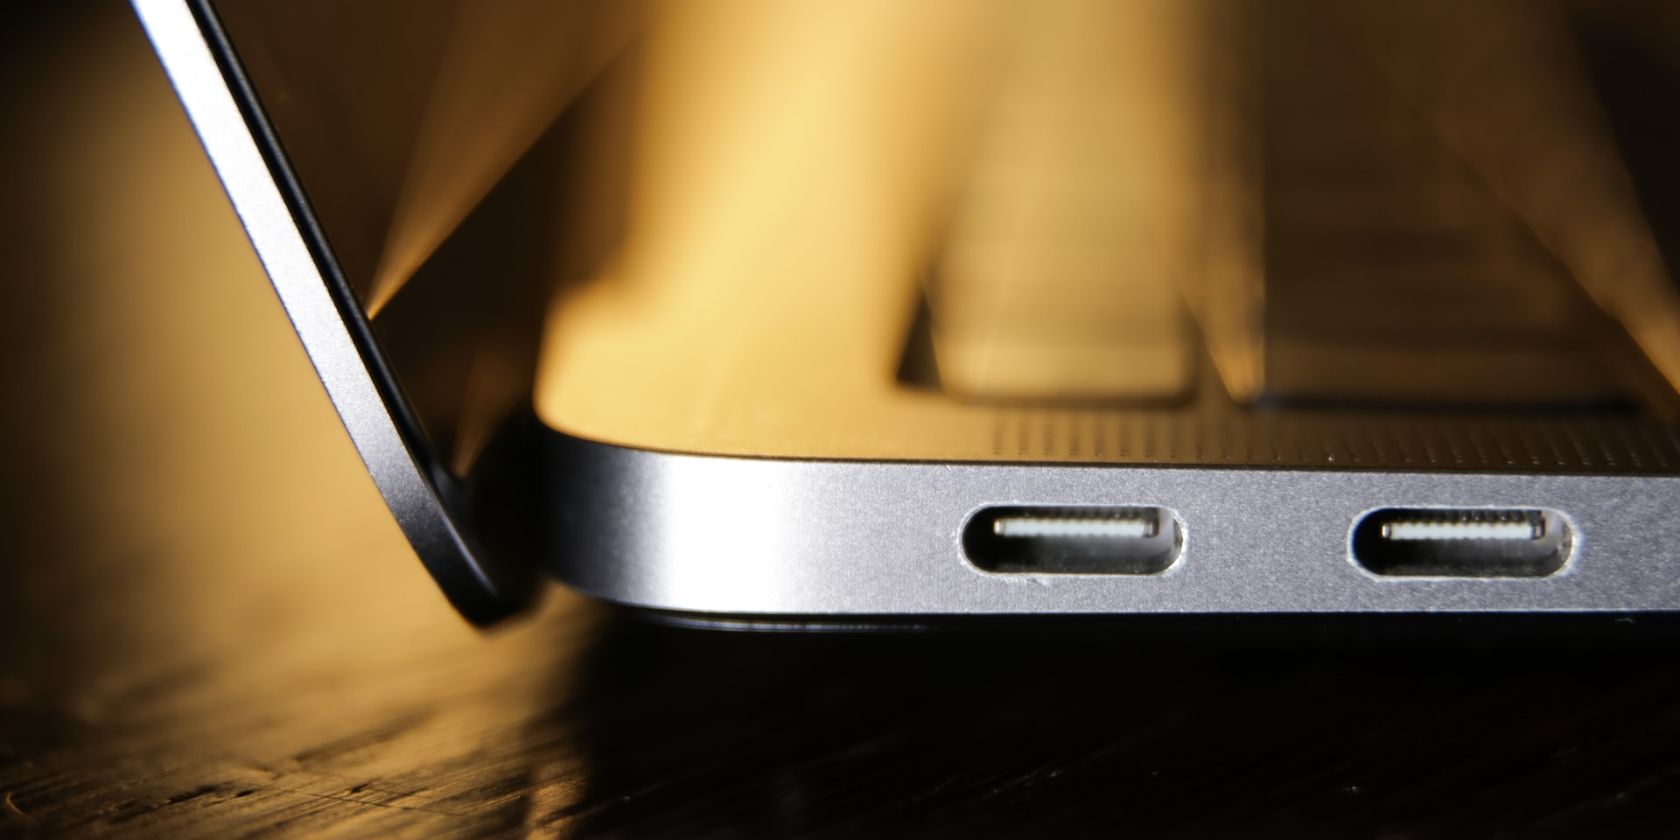 close-up of a MacBook's USB ports